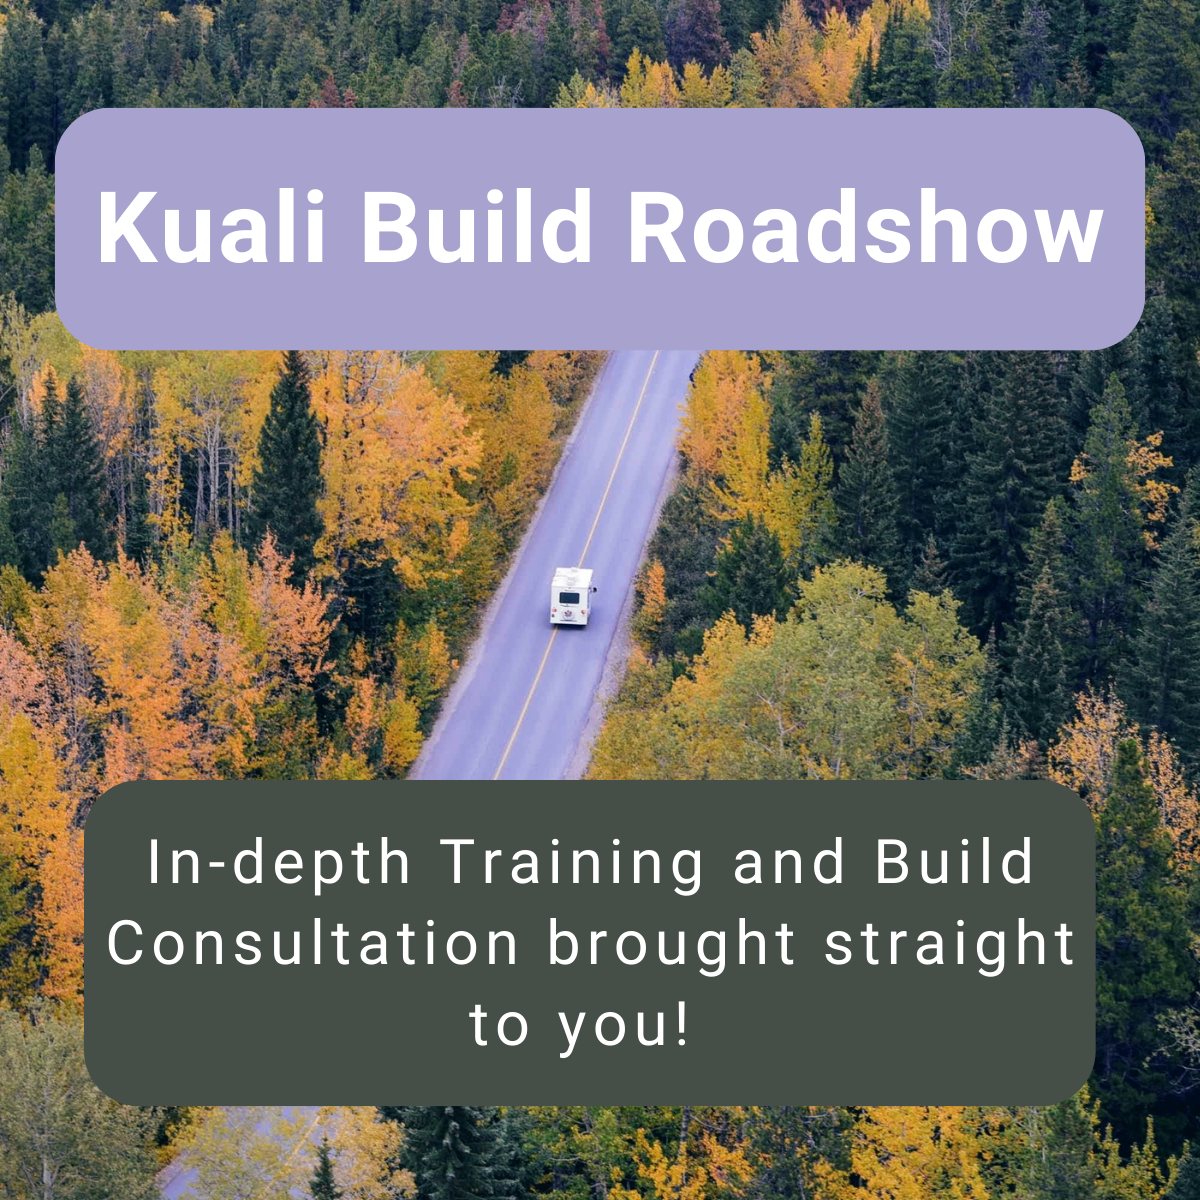 Kuali Build Roadshow flyer